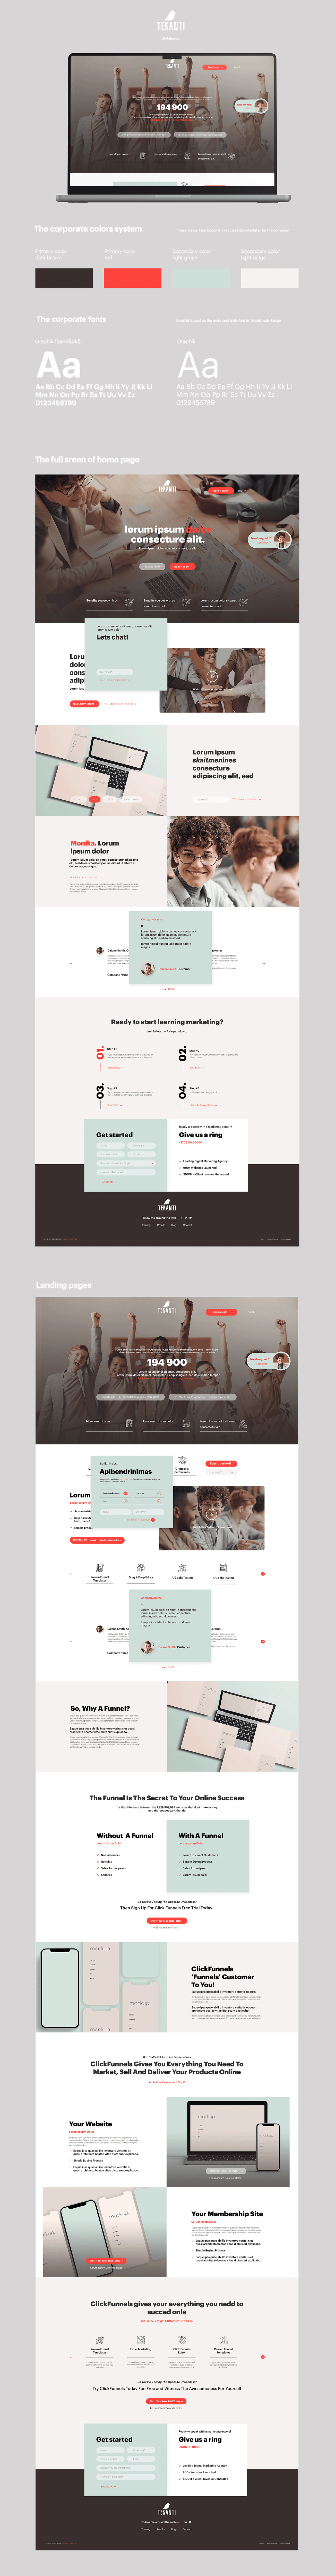 Webdesign addesign Advertisment Design